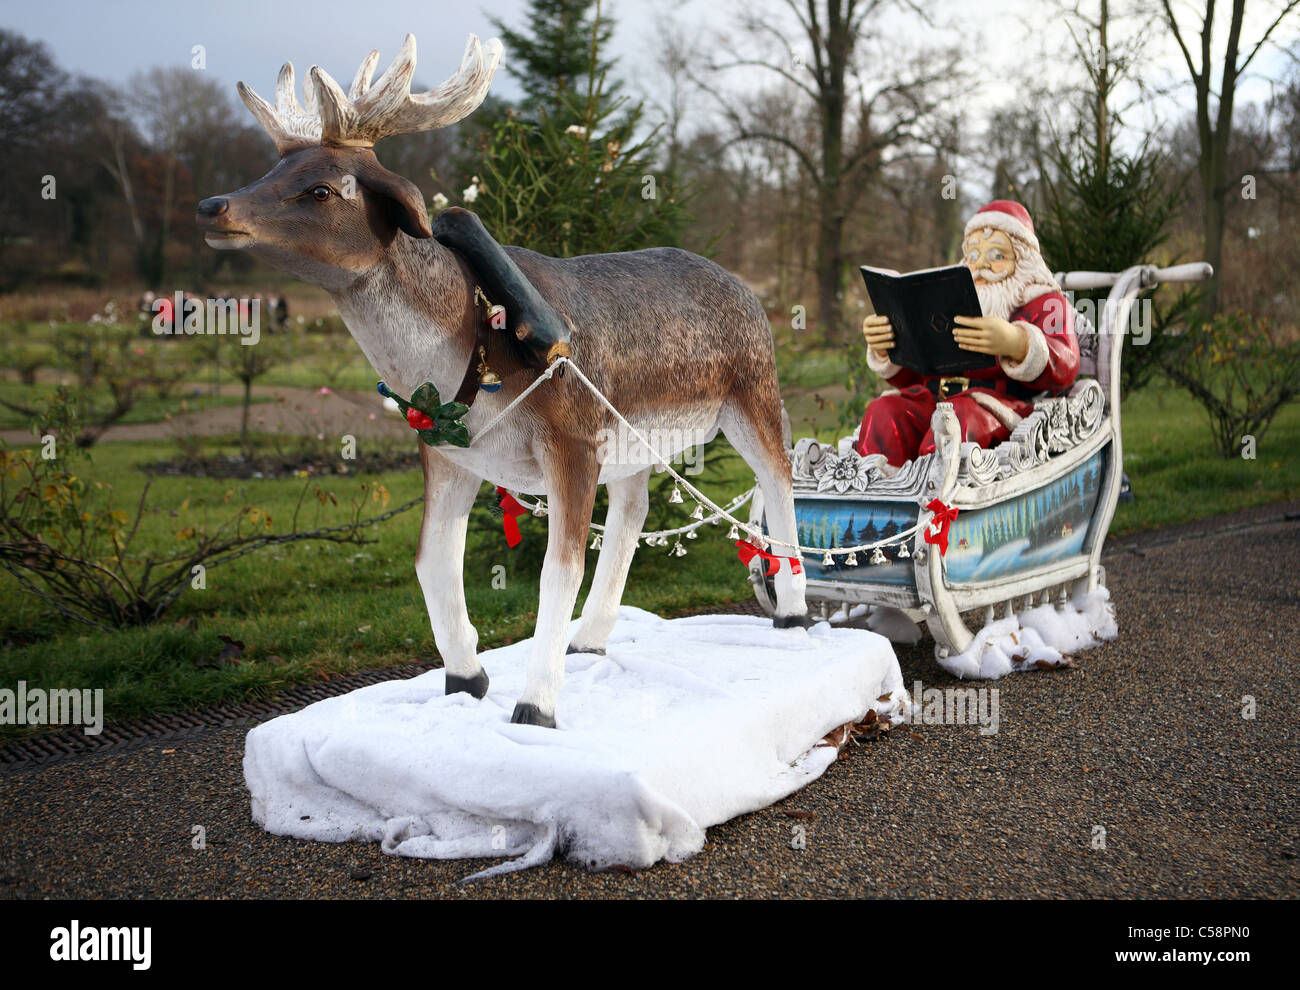 Sculpture of Santa Claus in his reindeer sleigh, Potsdam, Germany Stock Photo